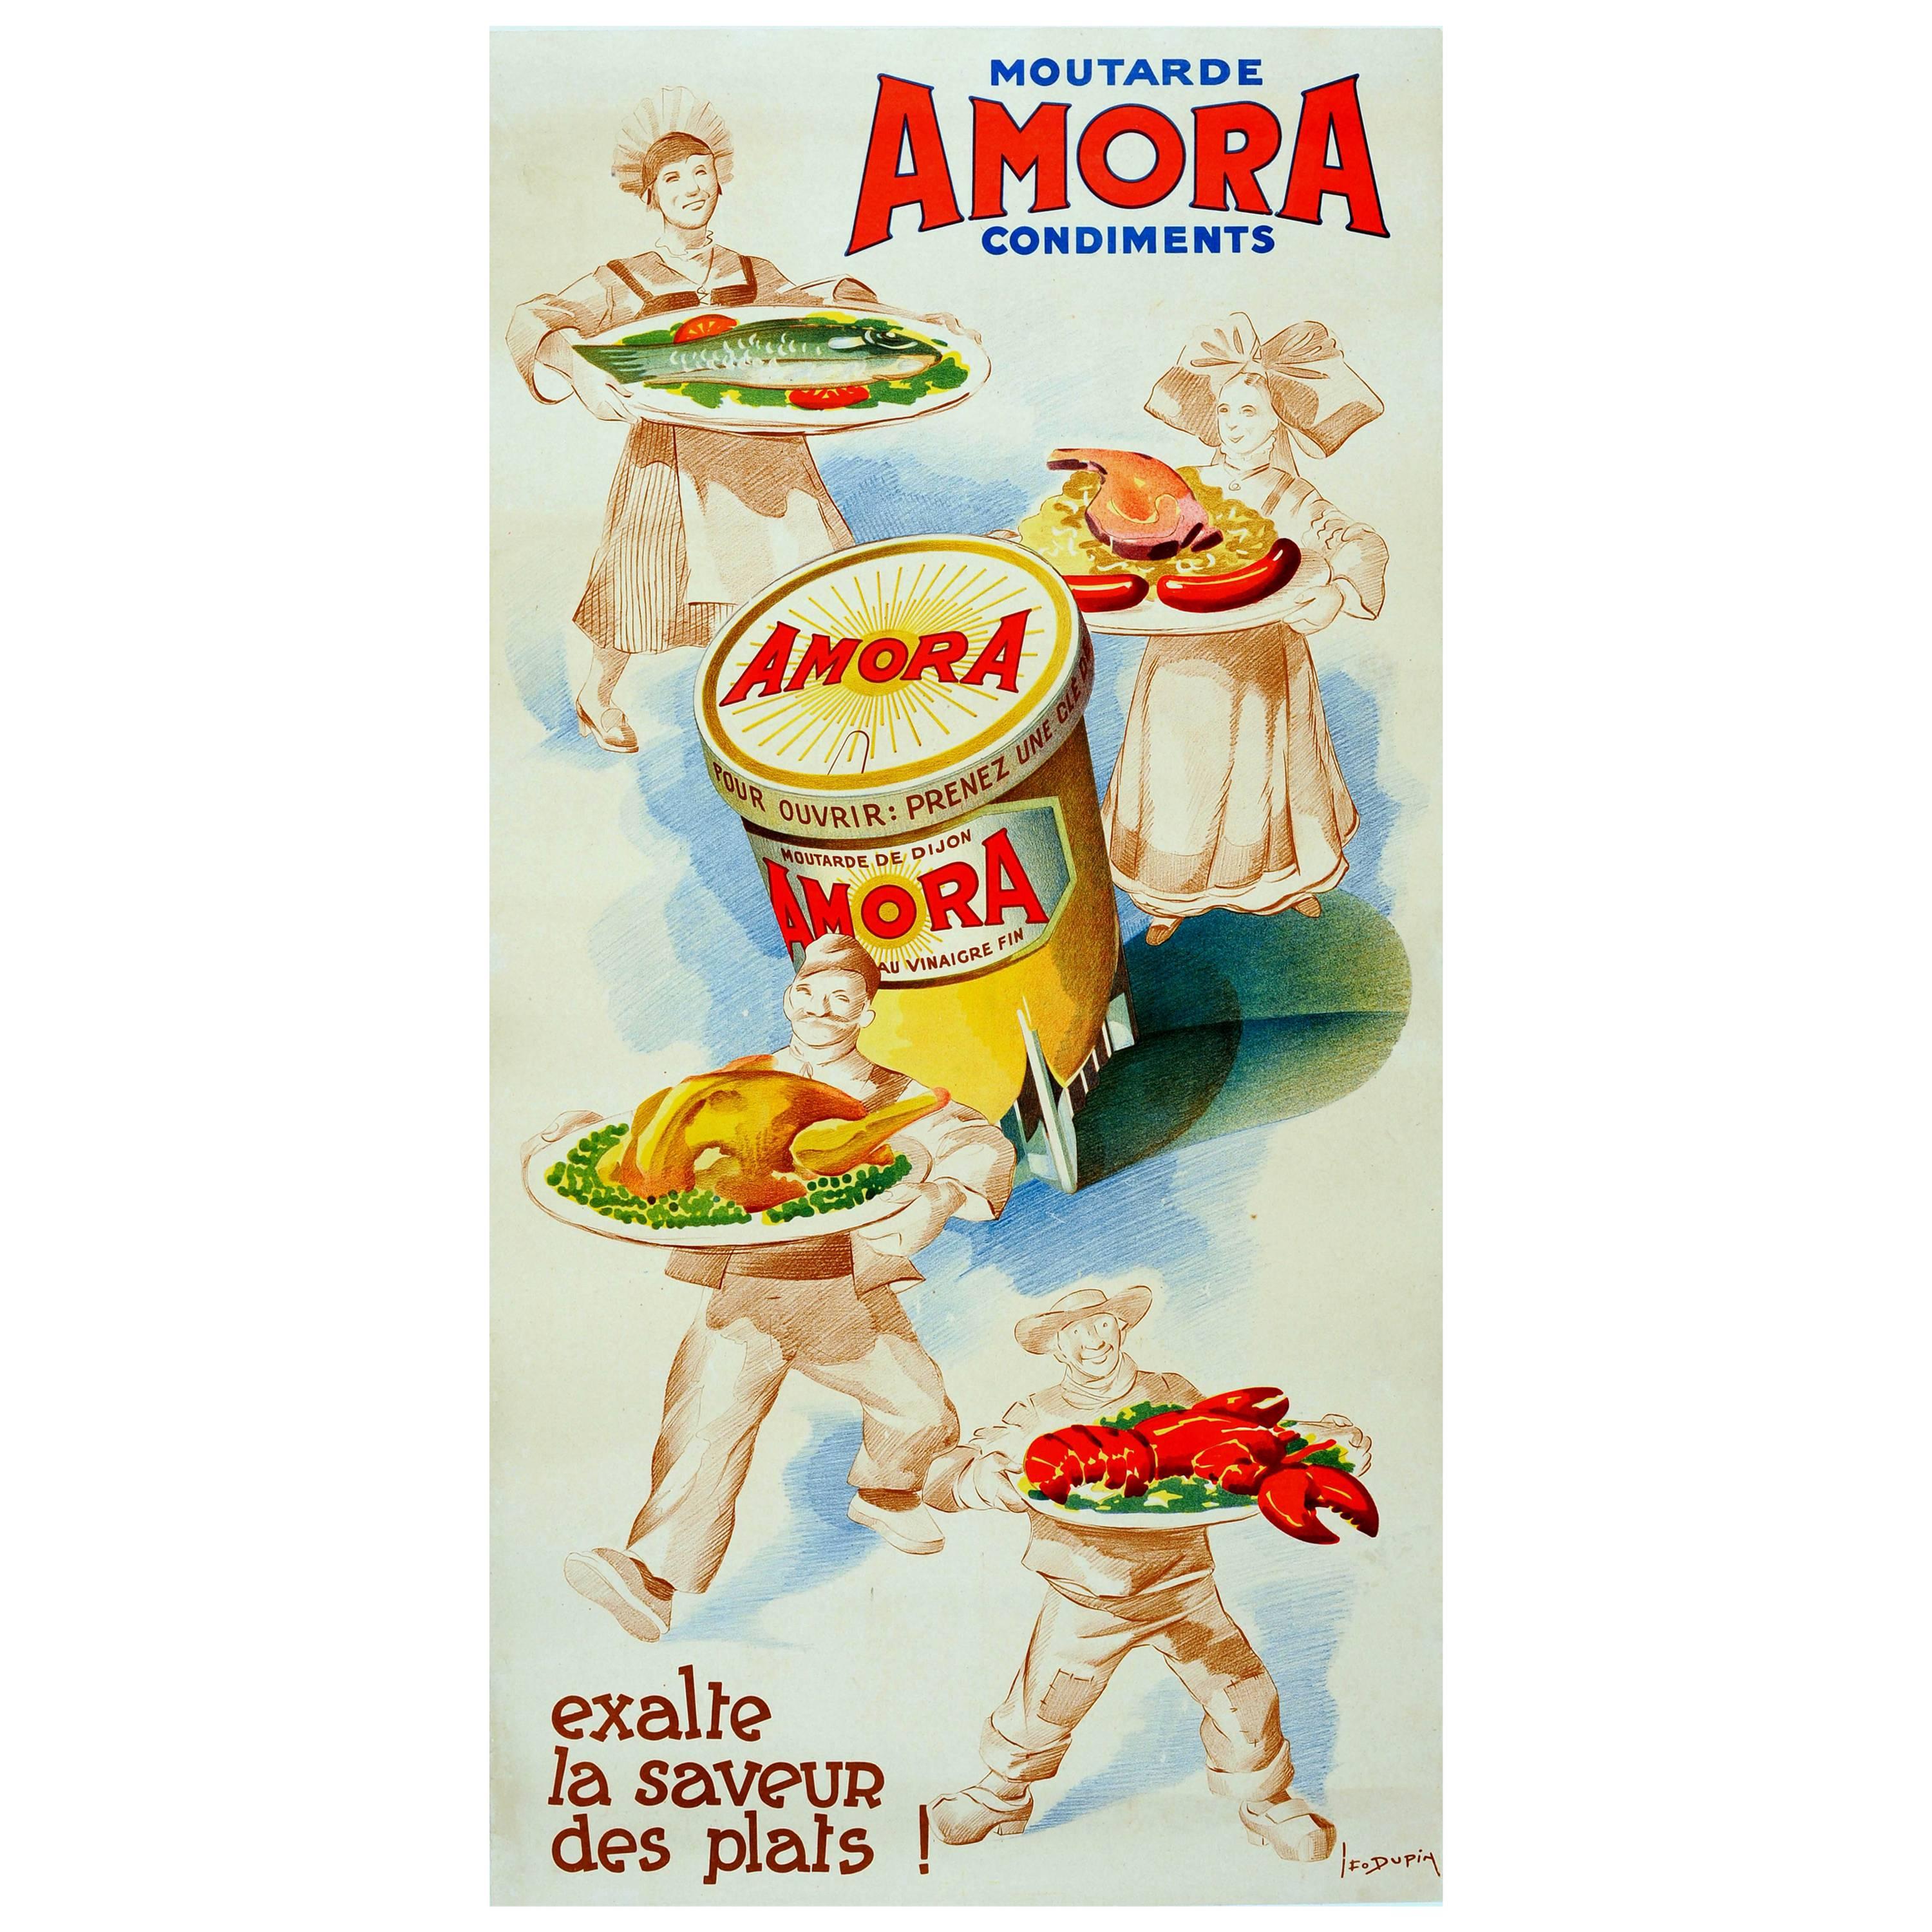 Rare Original Vintage Food Advertising Poster "Amora Mustard Brings Out Flavour"